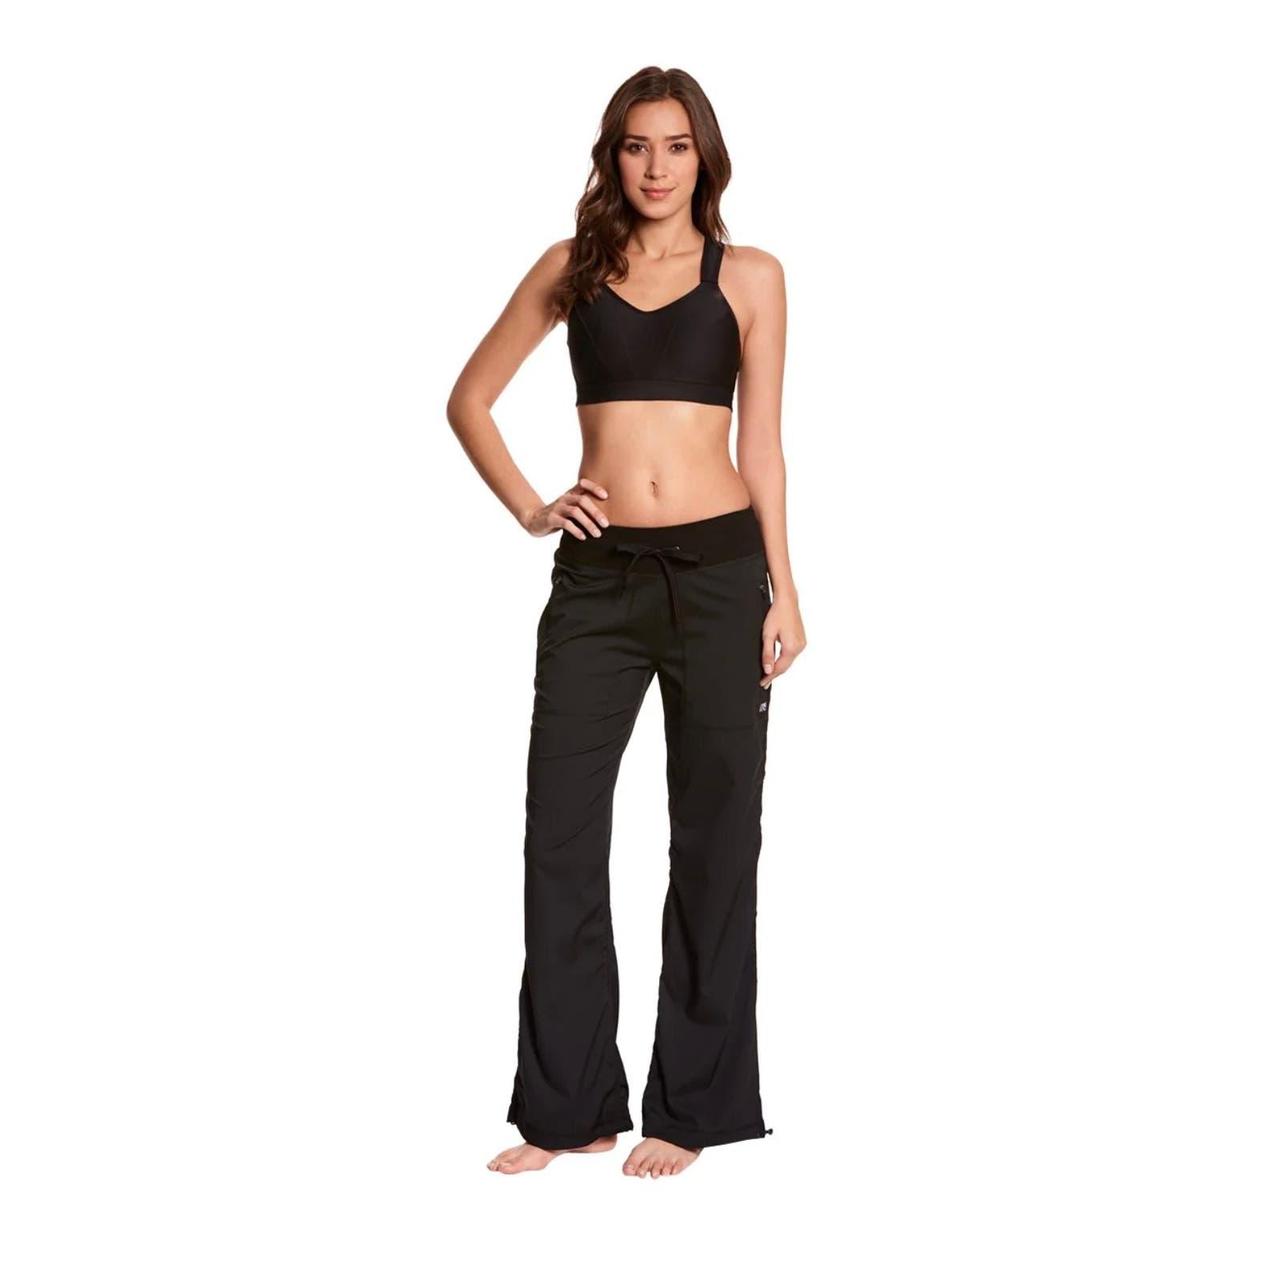 NWT Marika Stretch Woven Yoga Pants size M - Depop